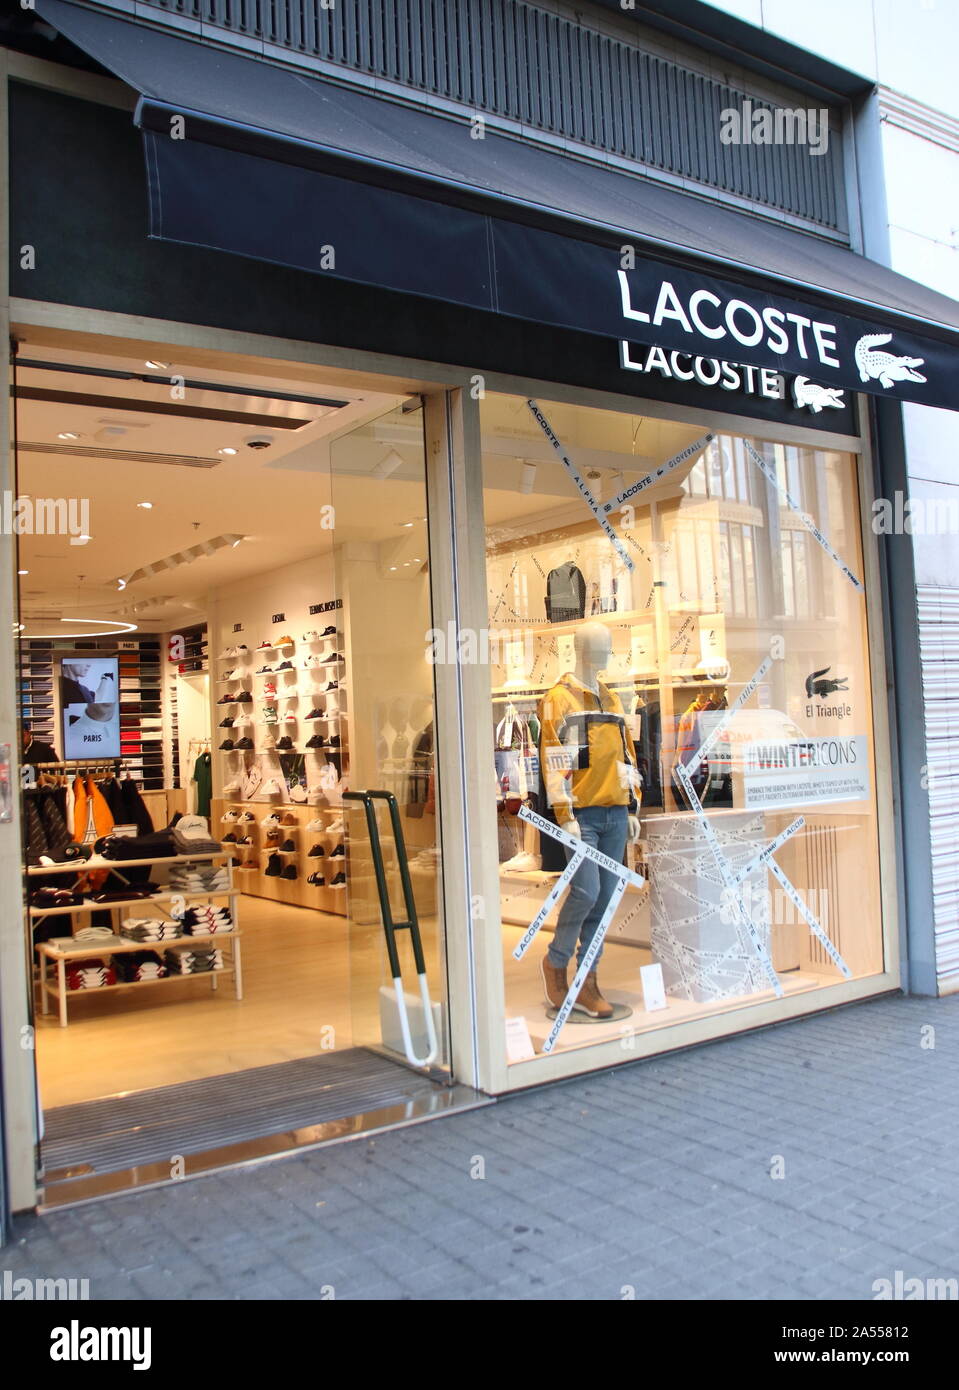 Du bliver bedre stamtavle se Lacoste store seen in Barcelona Stock Photo - Alamy